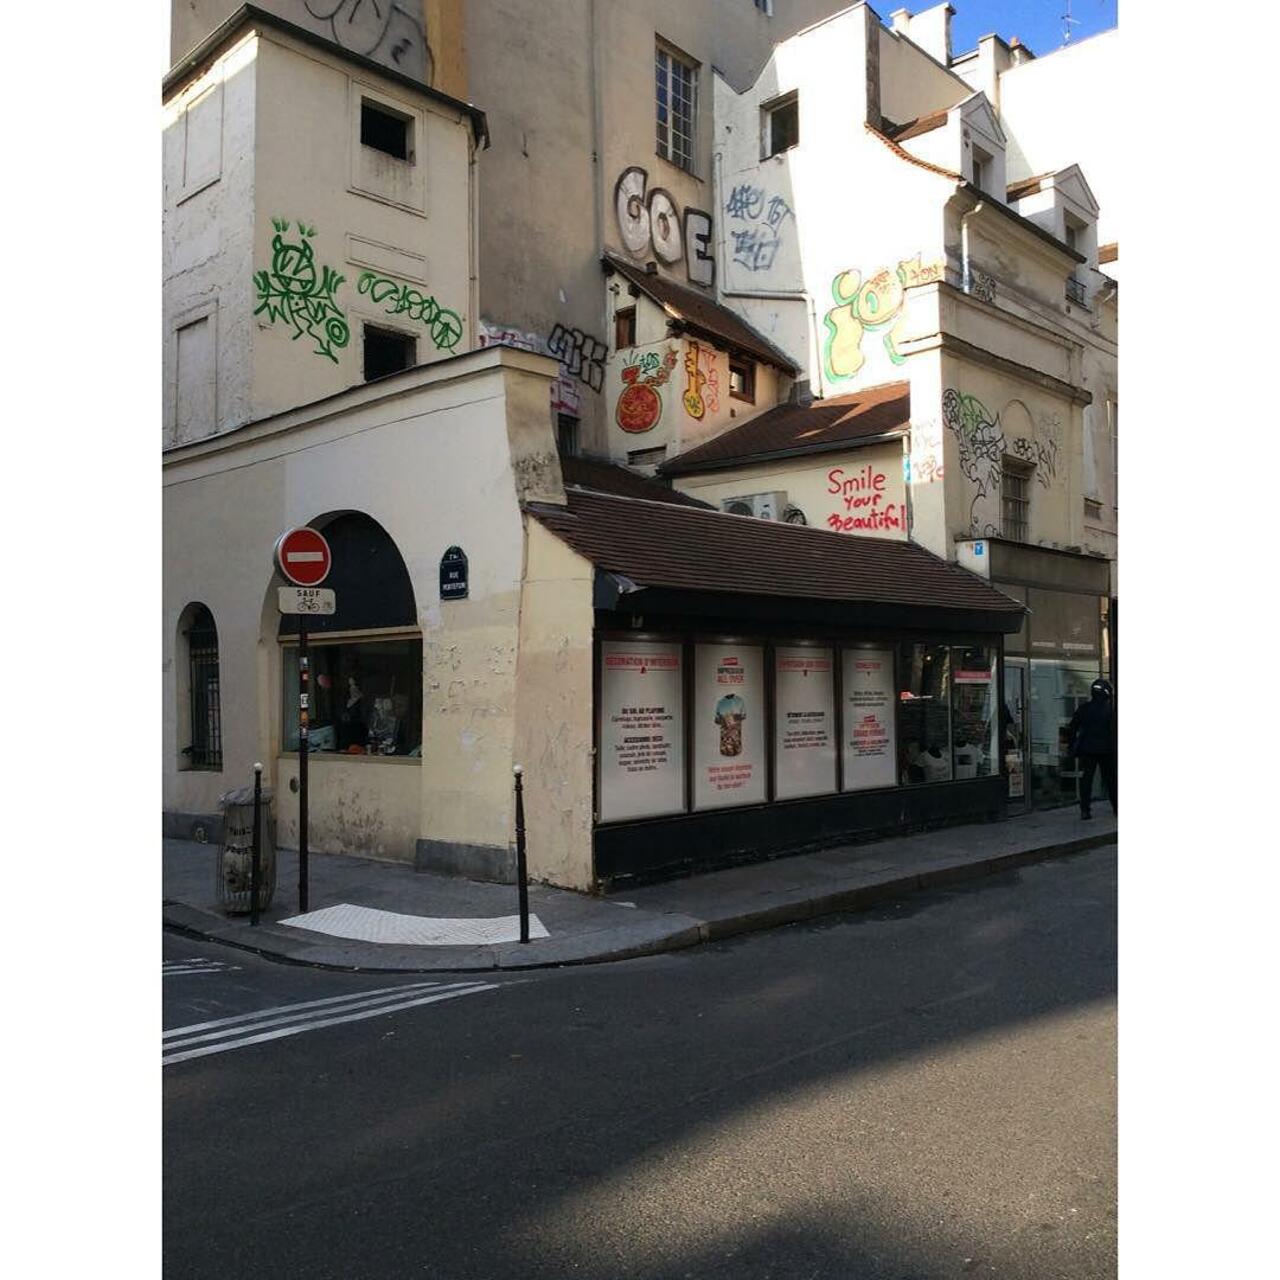 RT @circumjacent_fr: #Paris #graffiti photo by @reneedeneve http://ift.tt/1OAaEHe #StreetArt http://t.co/k4CefiNbuf